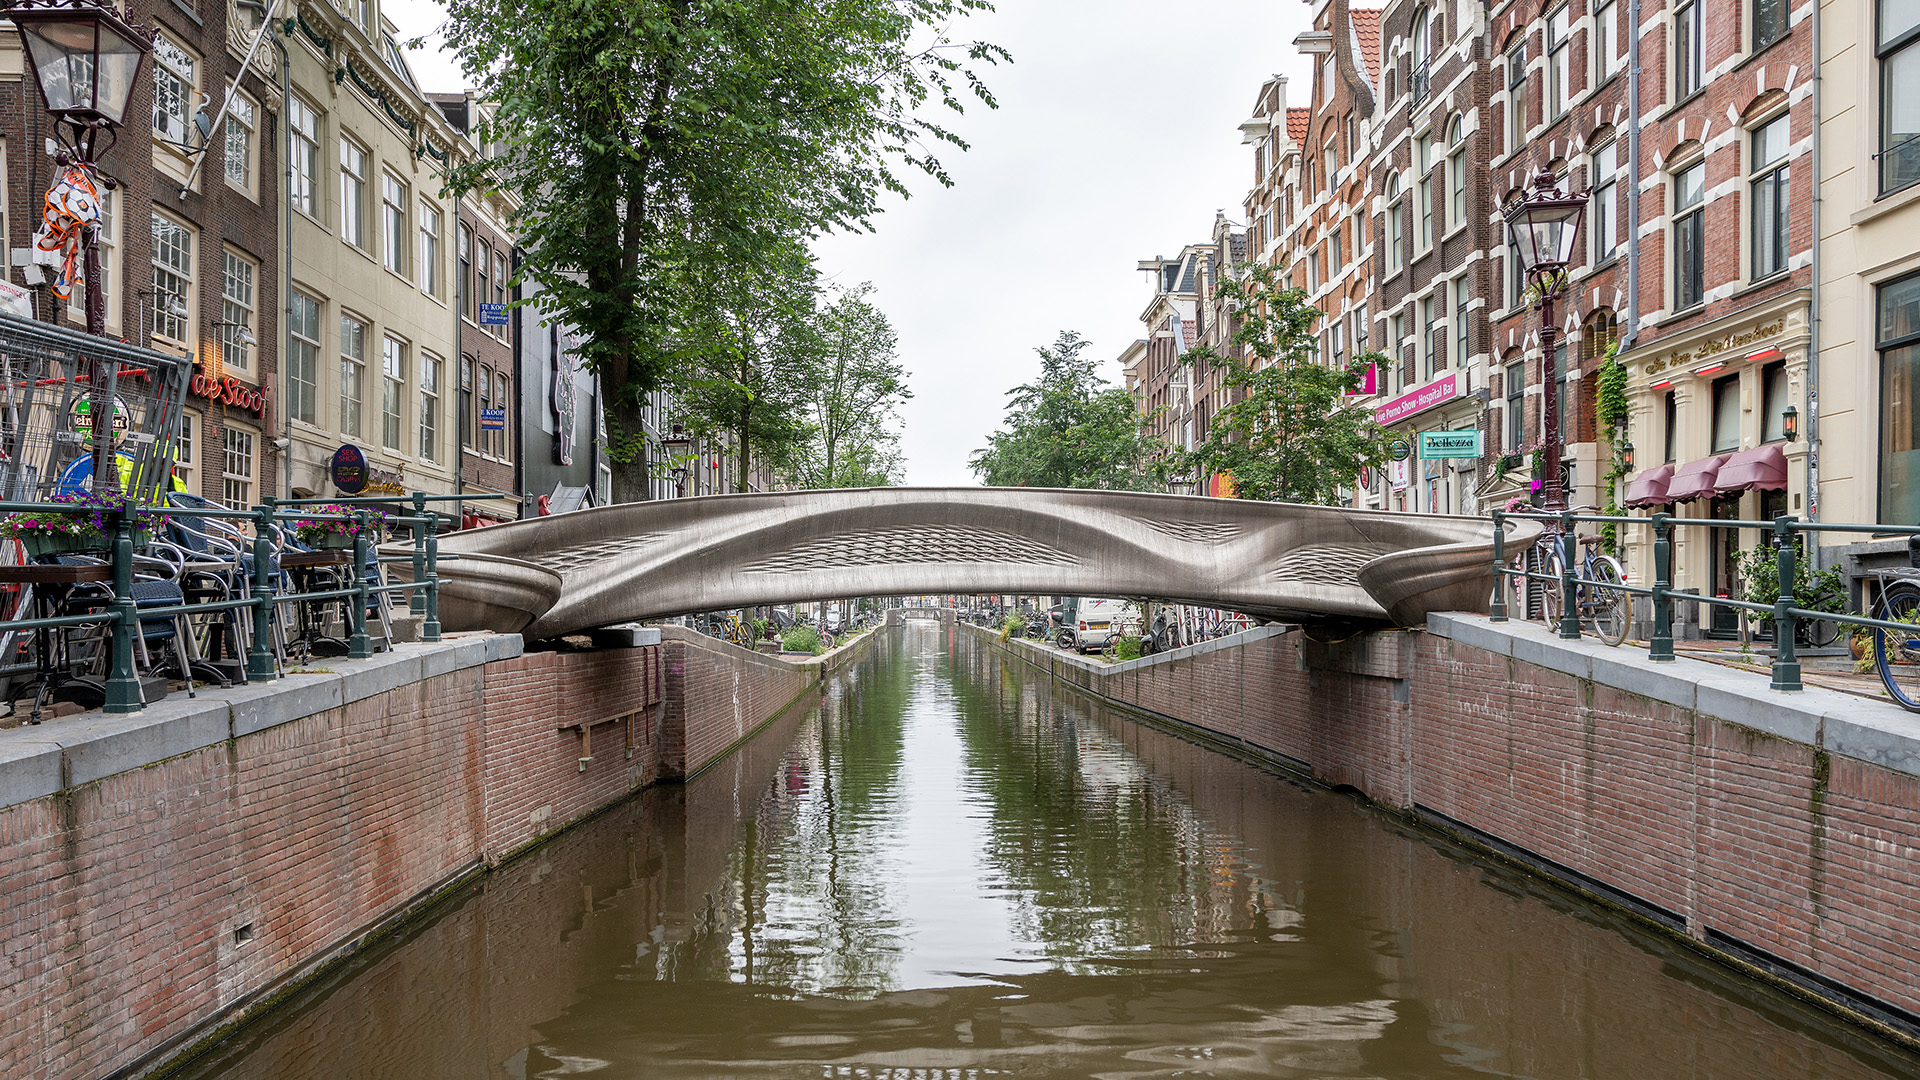 The 3D printed bridge installed in Amsterdam (credit: Thea van den Heuvel)